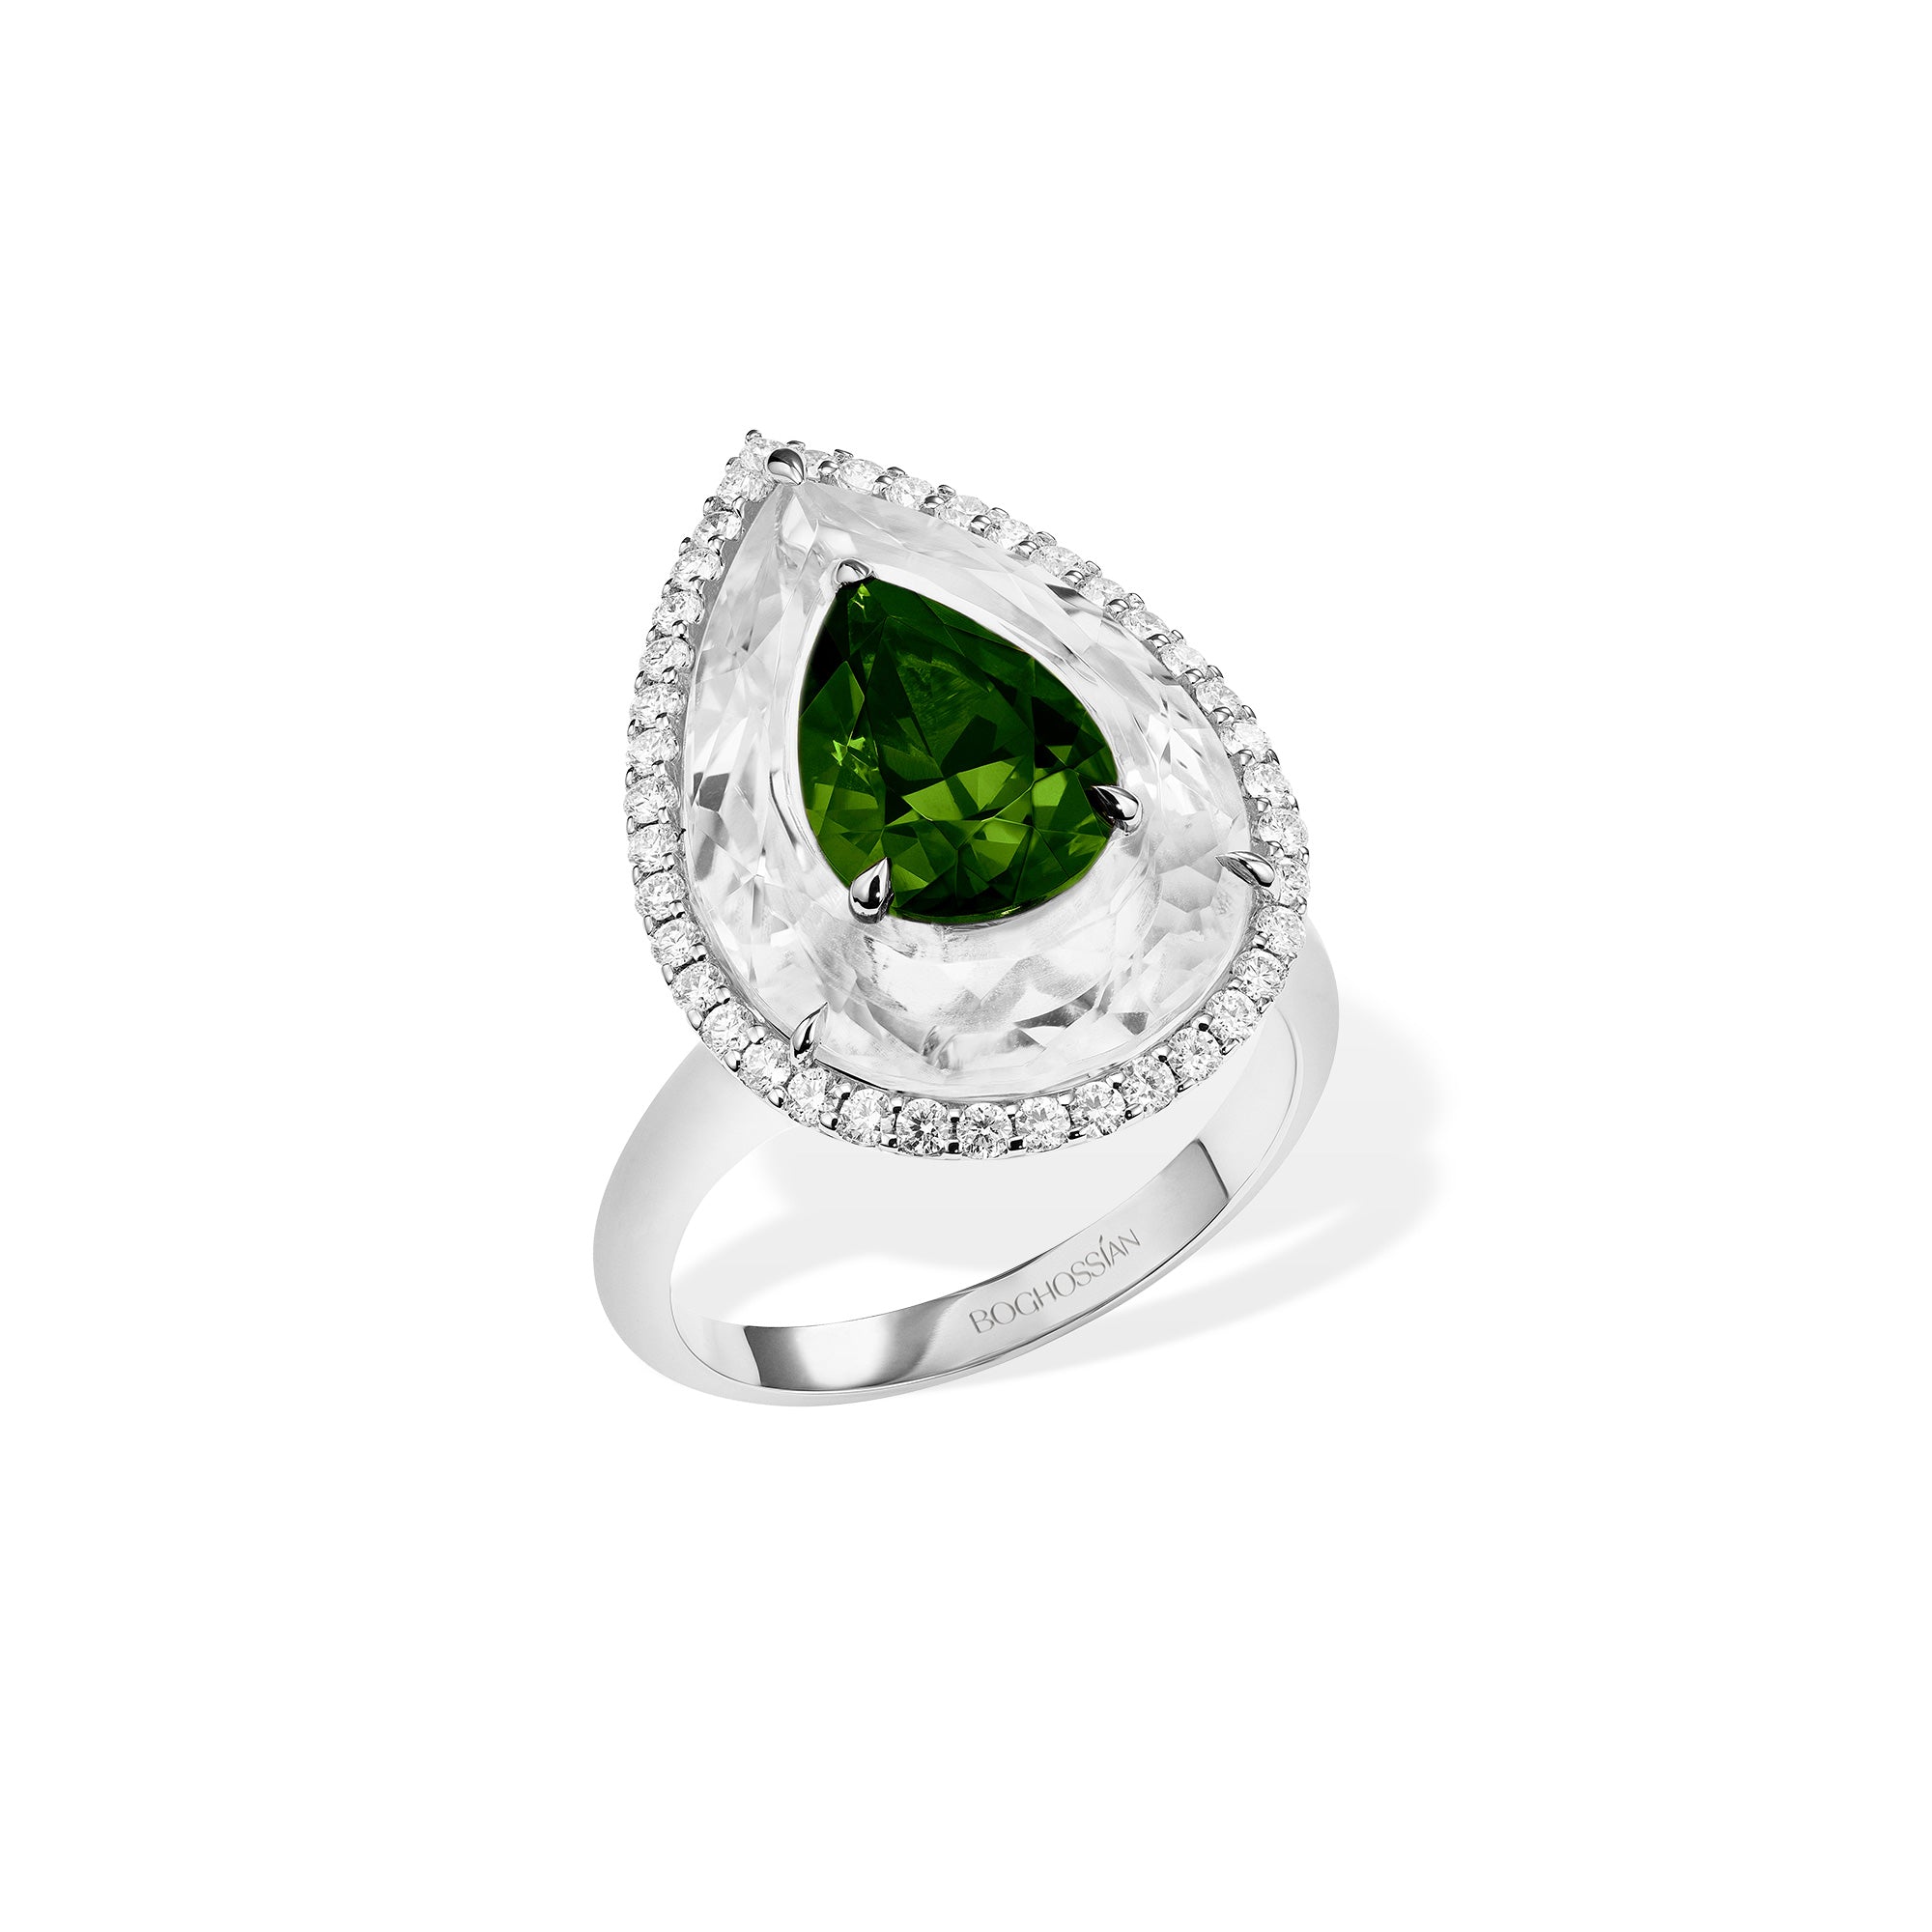 Shine - Green Tourmaline and Rock Crystal Ring